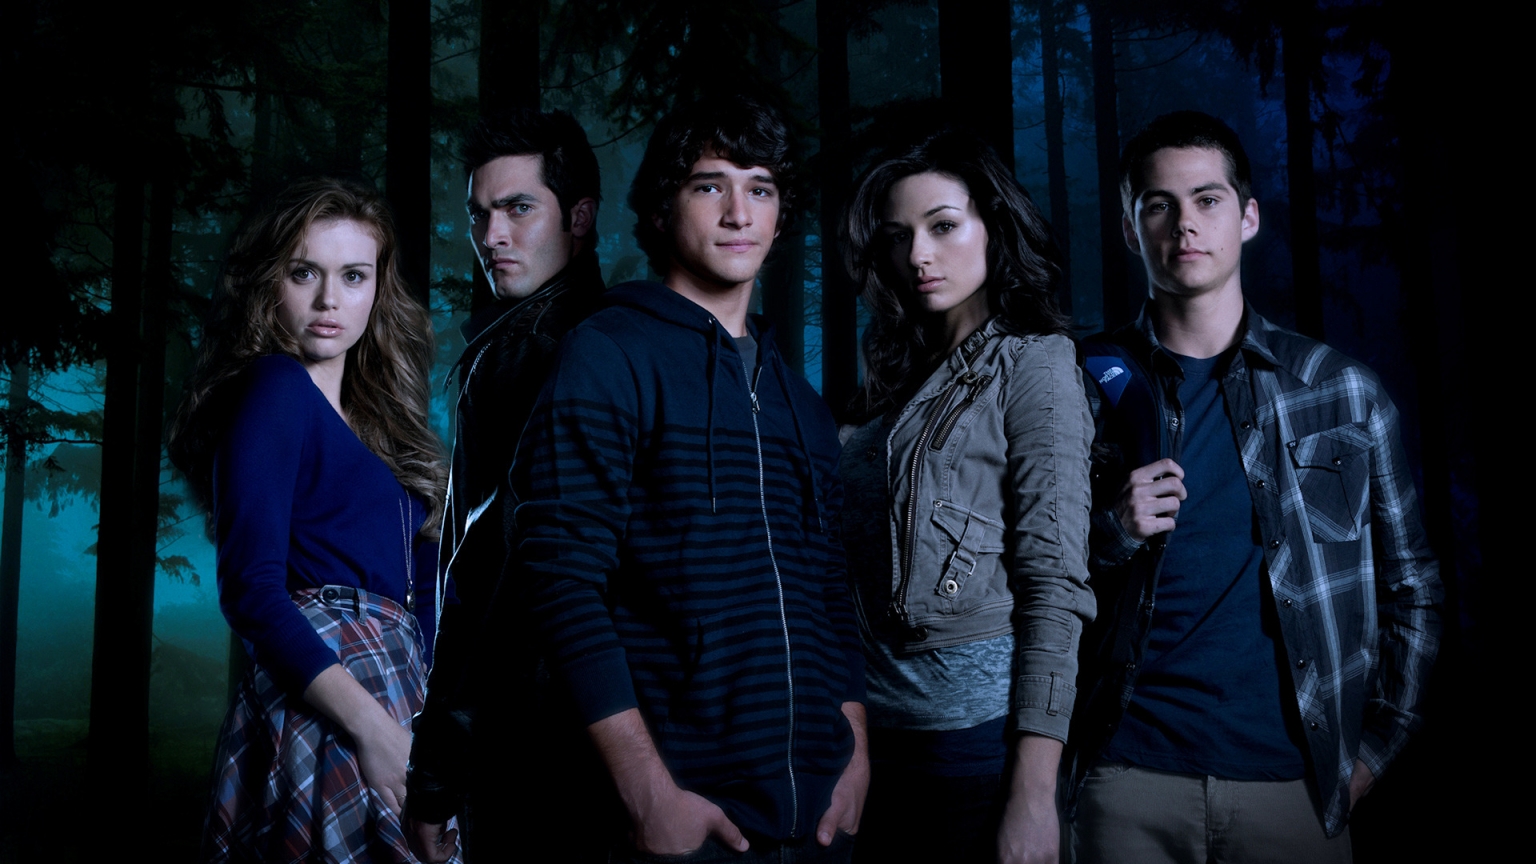 Teen Wolf Cast for 1536 x 864 HDTV resolution